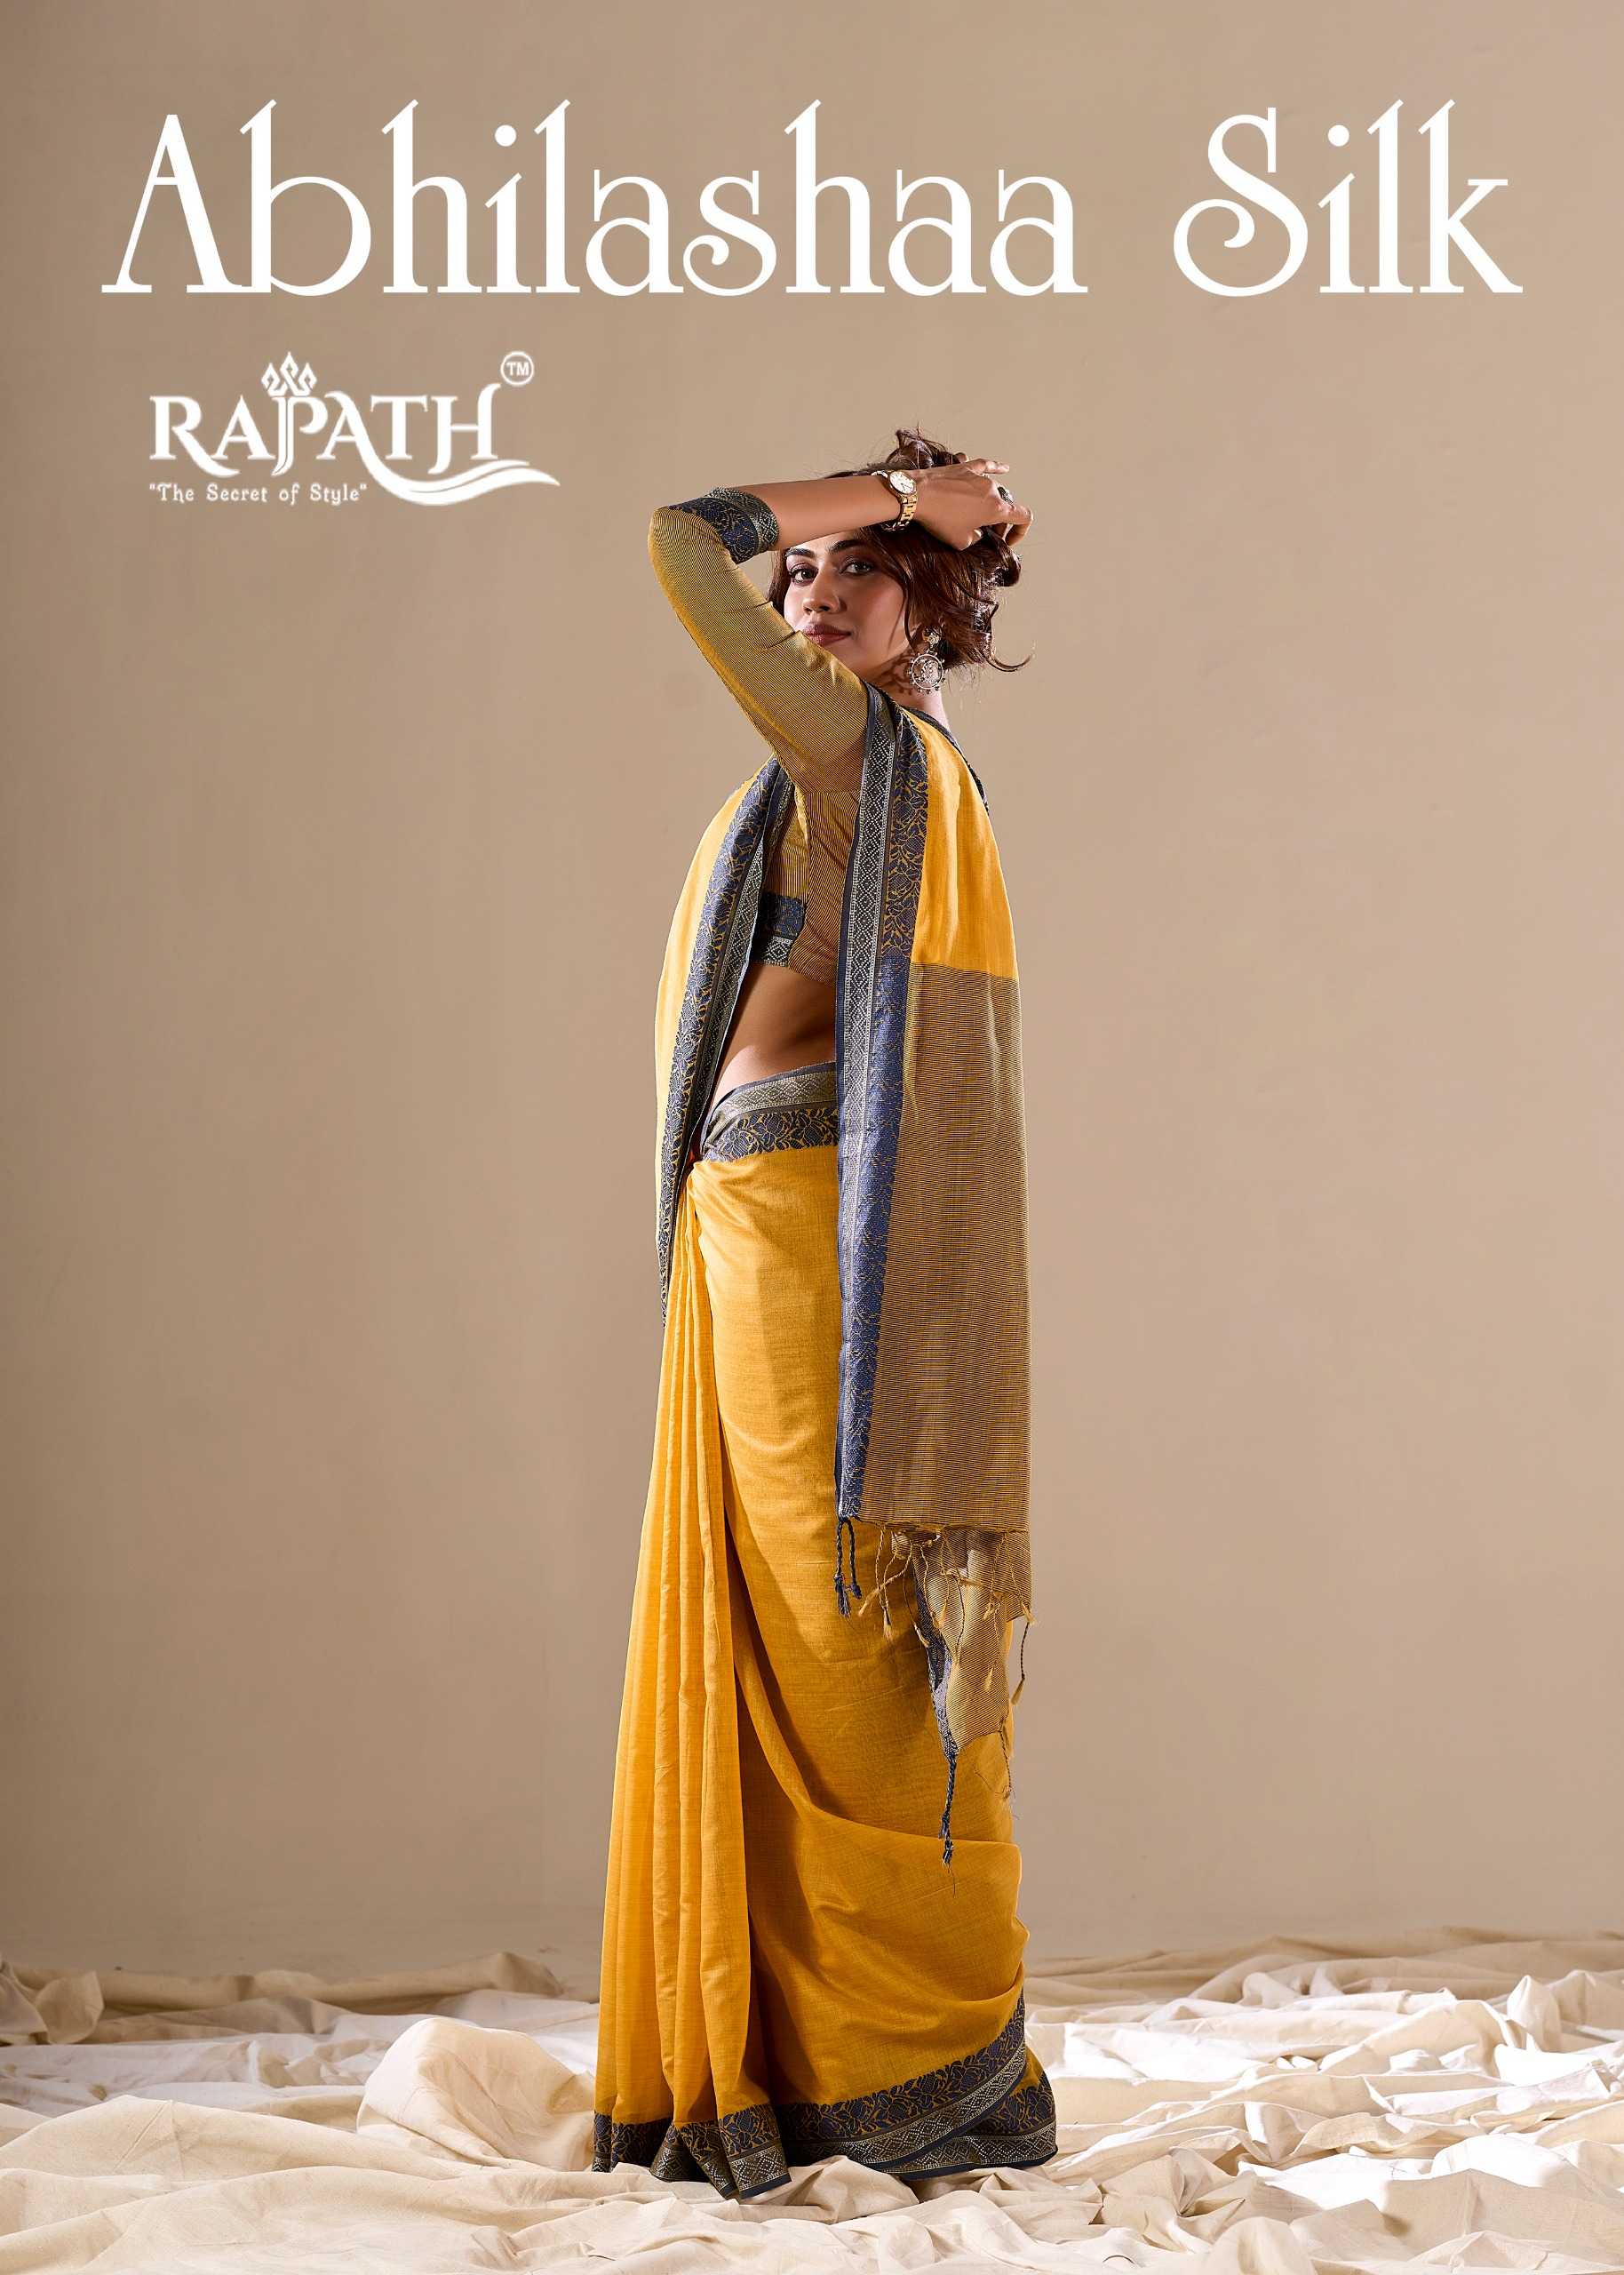 rajpath abhilasha silk beautiful wear handloom cotton saree collection 